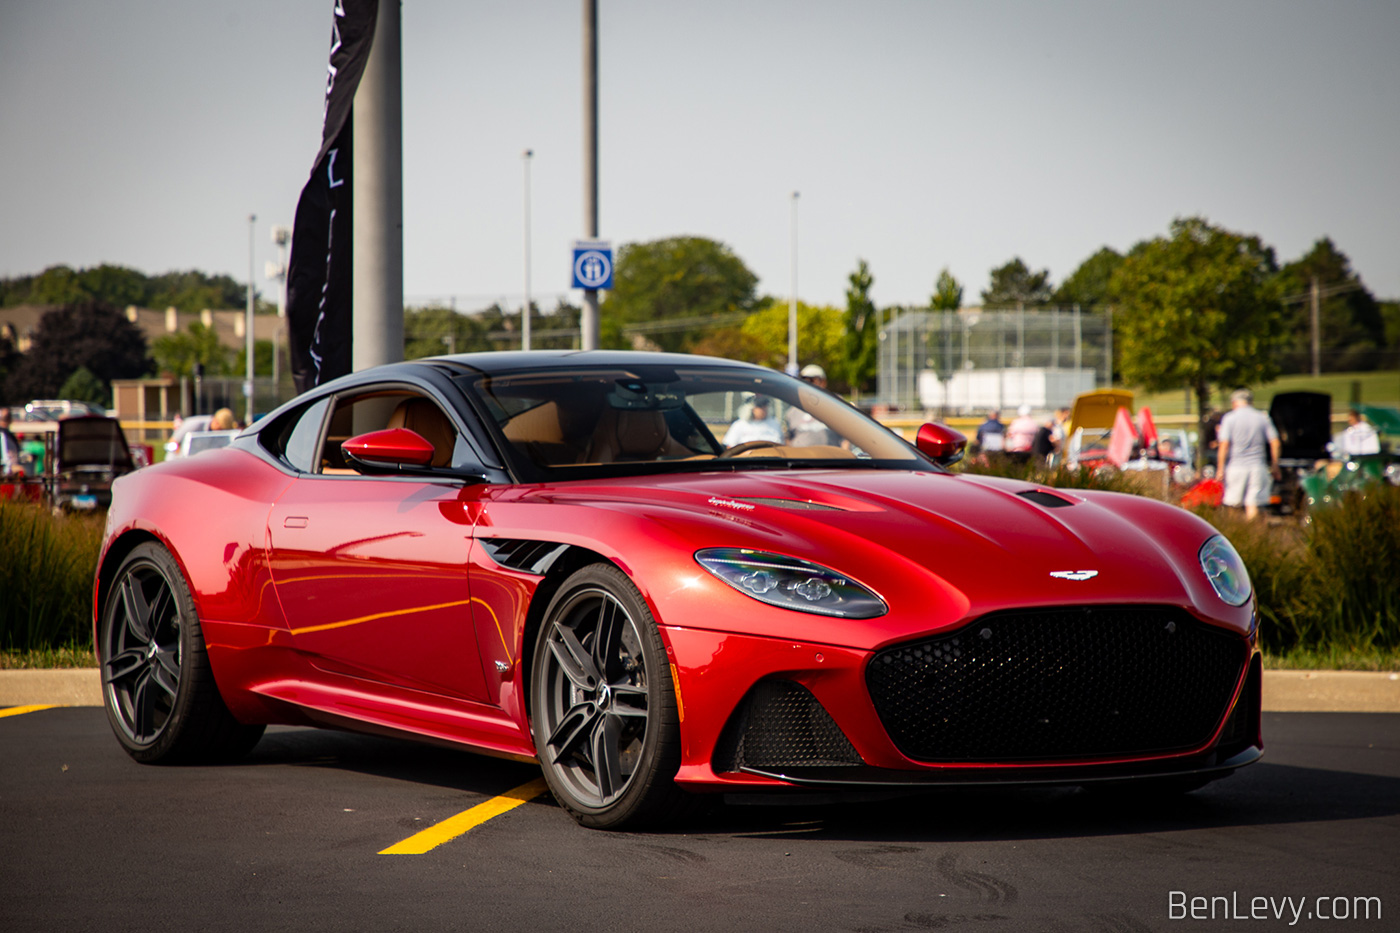 Red Aston Martin DBS Superleggera at the British Car Festival